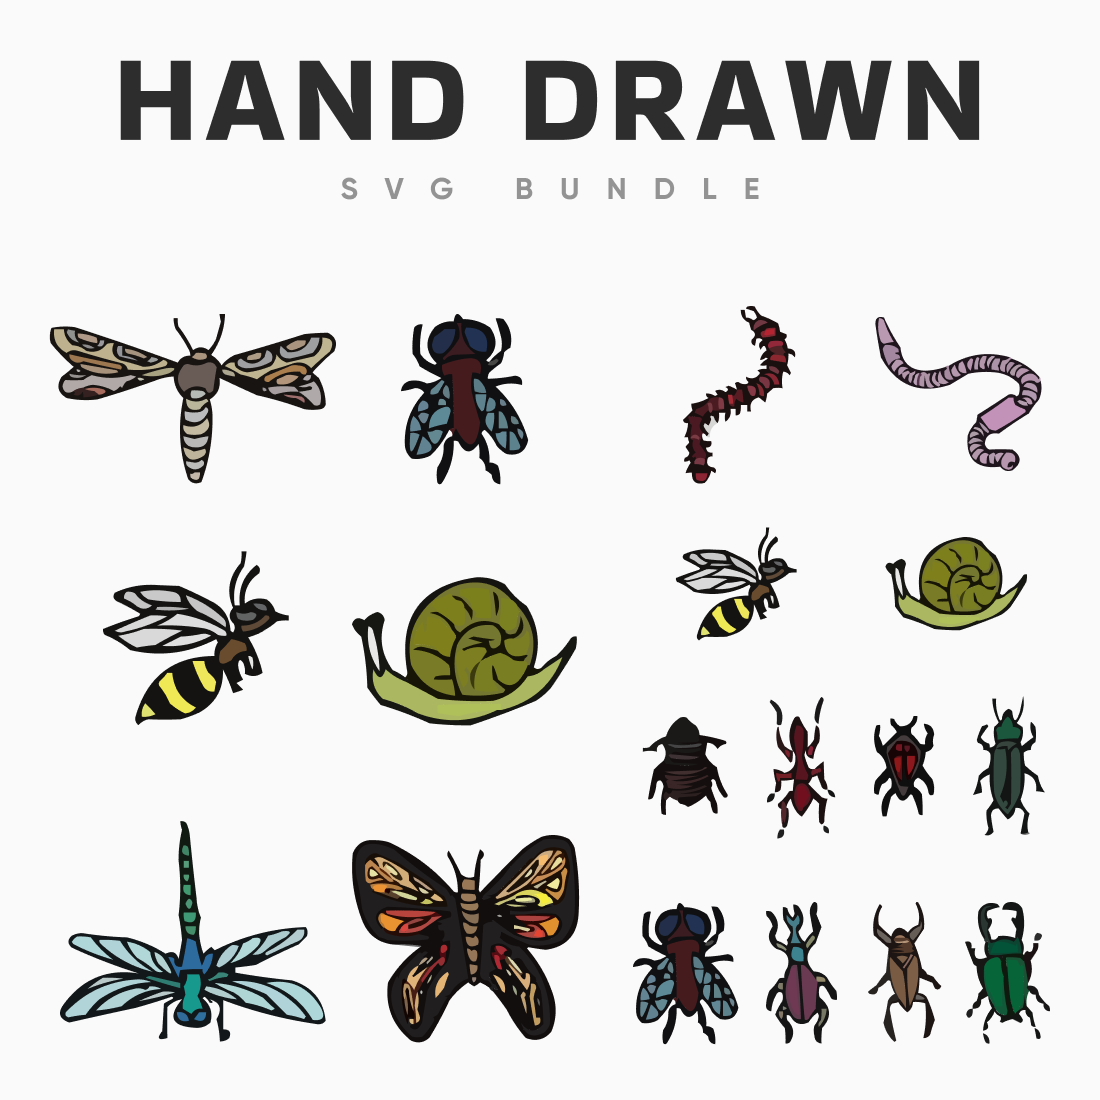 Interesting hand drawn SVG bundle.